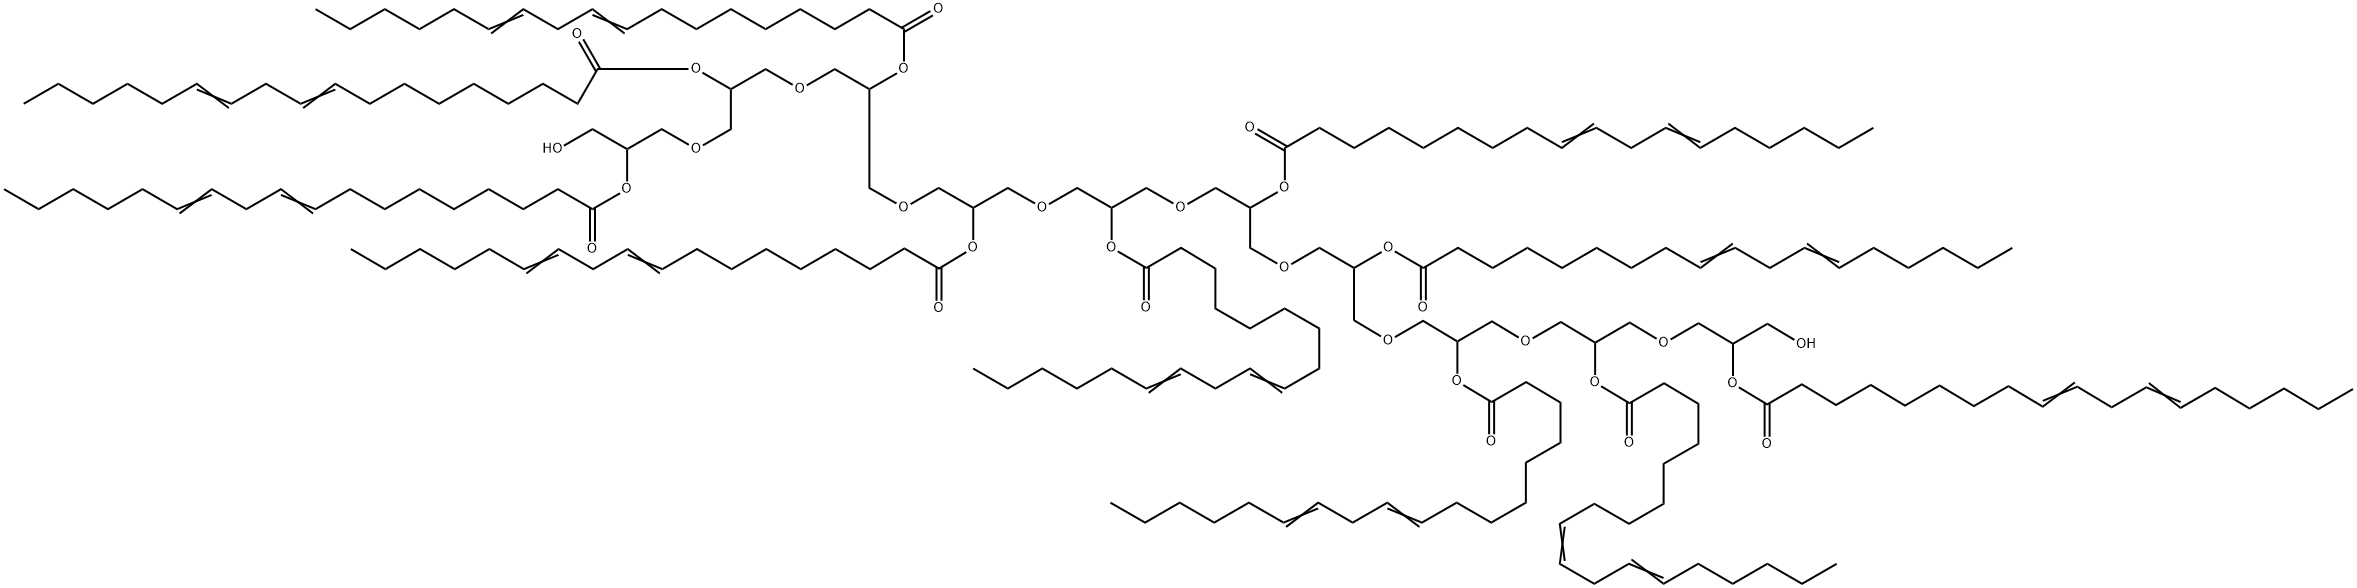 glycerol, decamer, deca(octadeca-9,12-dienoate)|聚甘油-10 十异硬脂酸酯